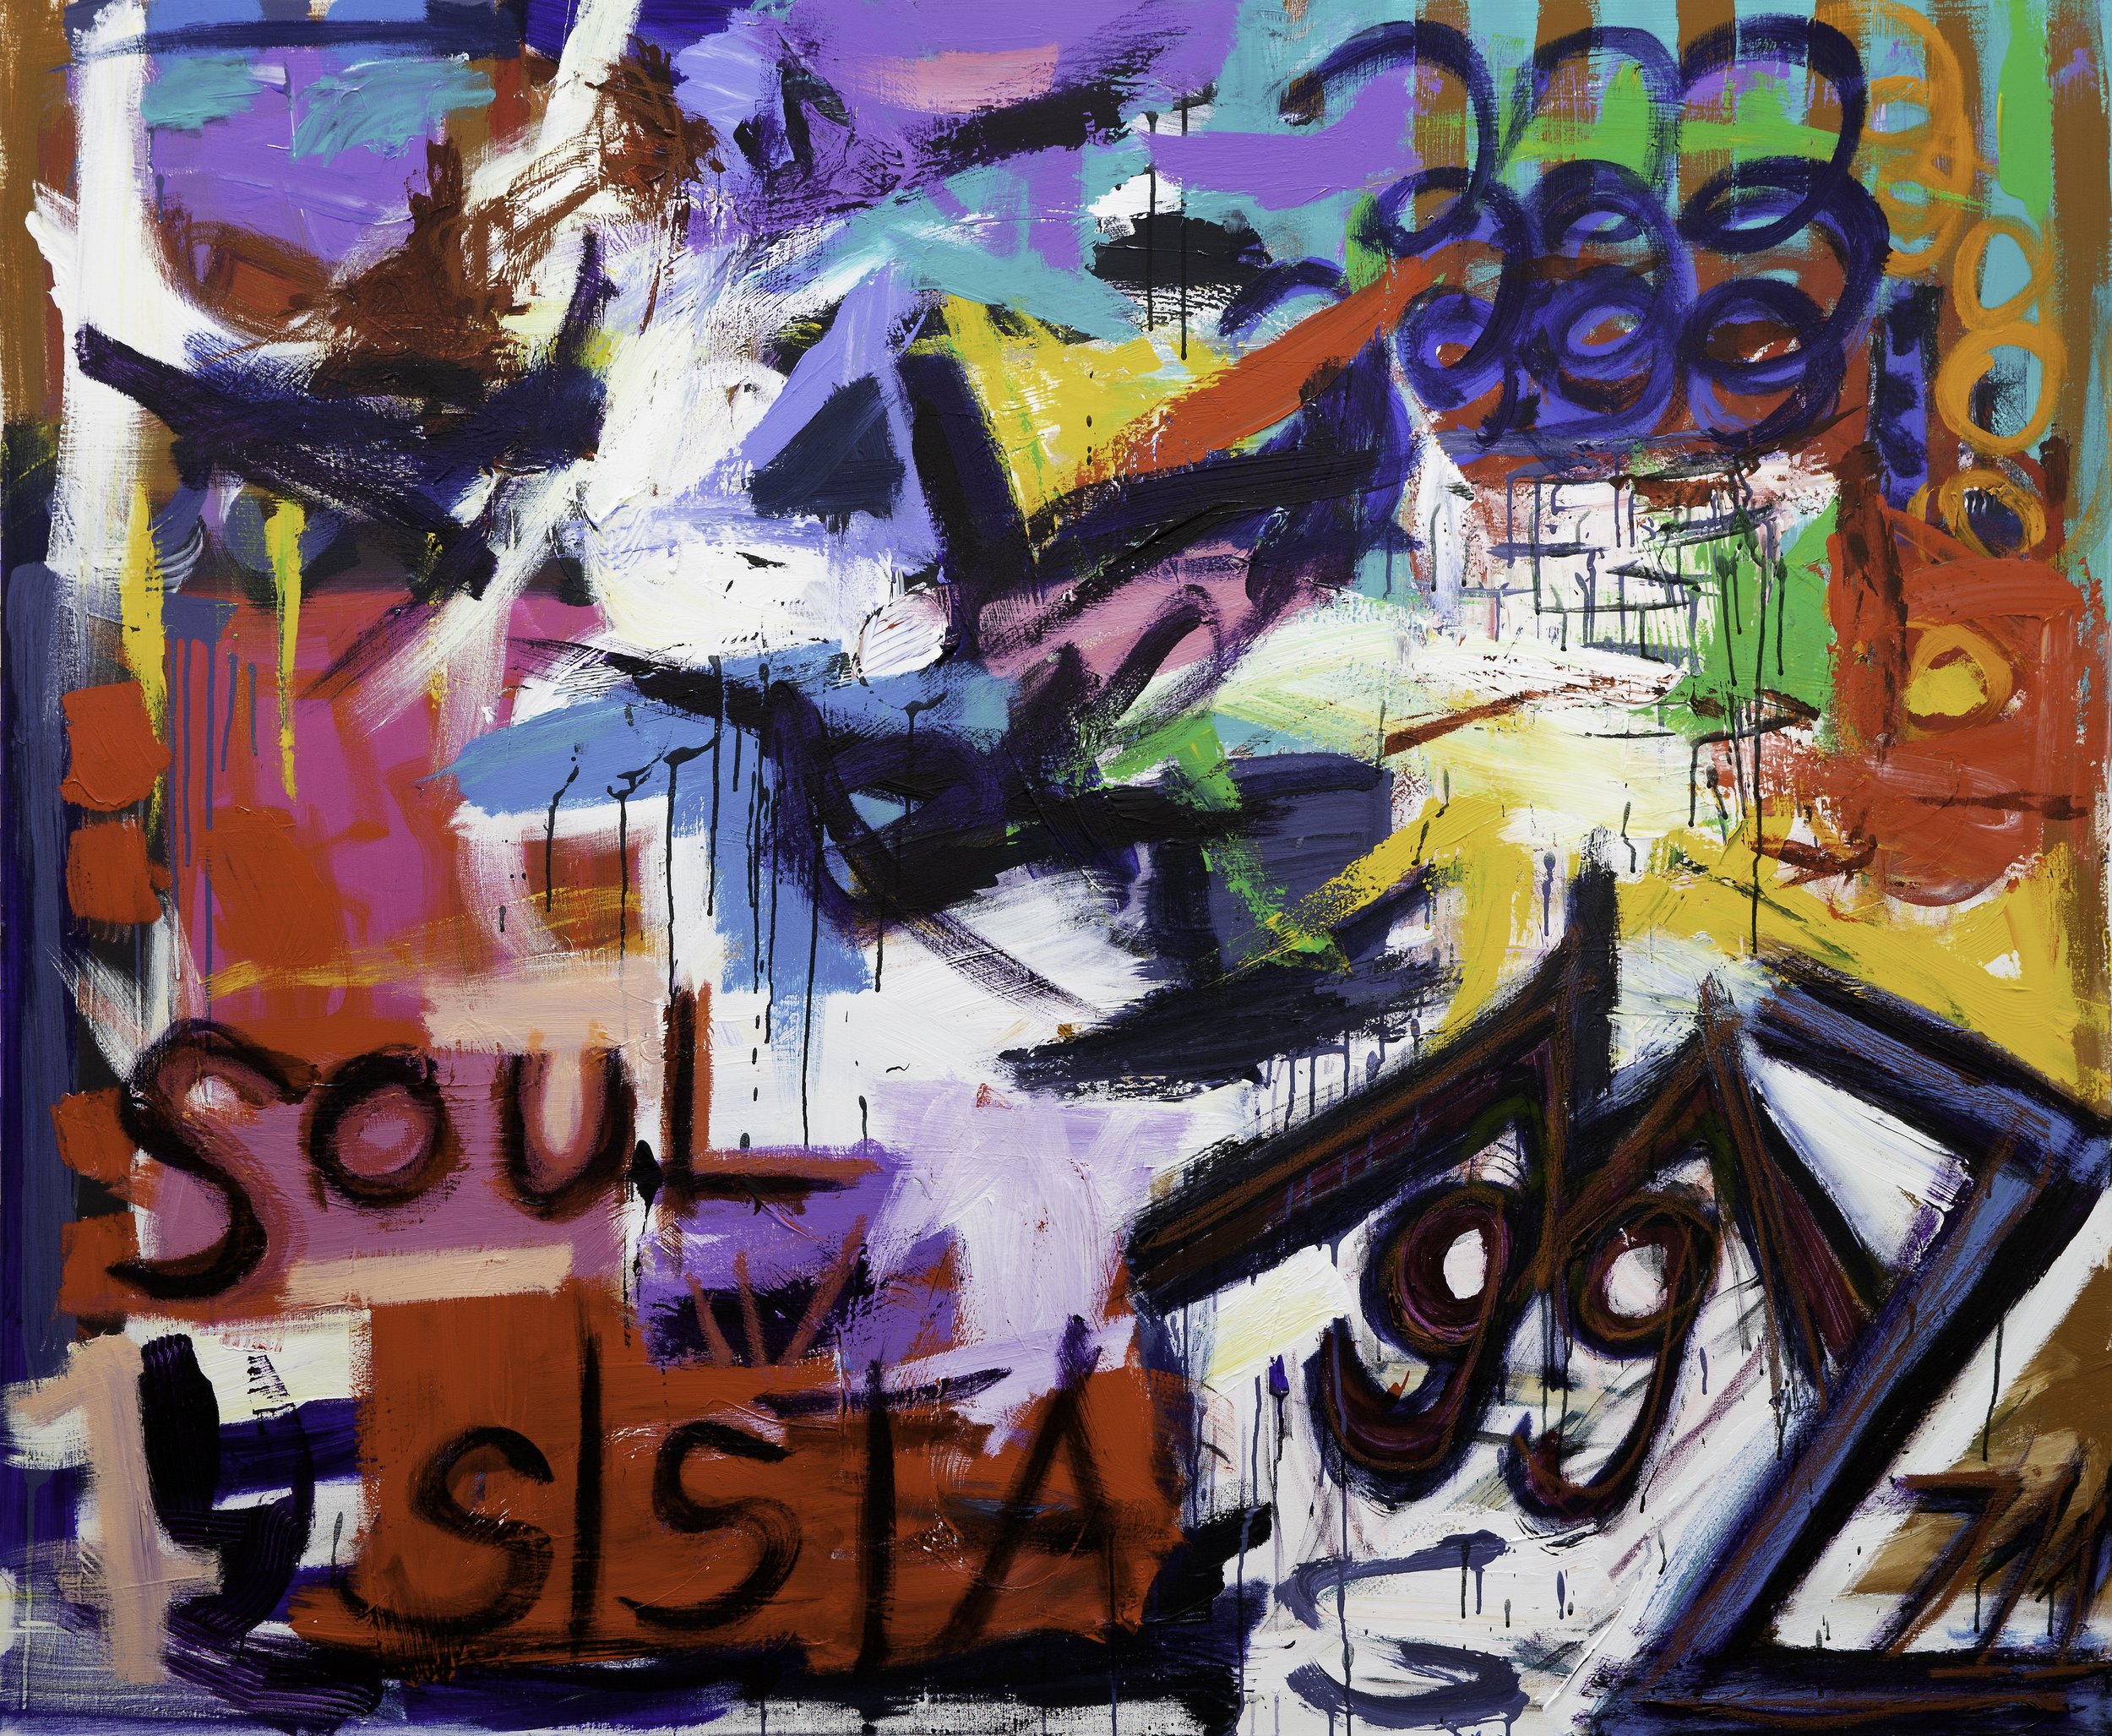 Soul Sista.jpg